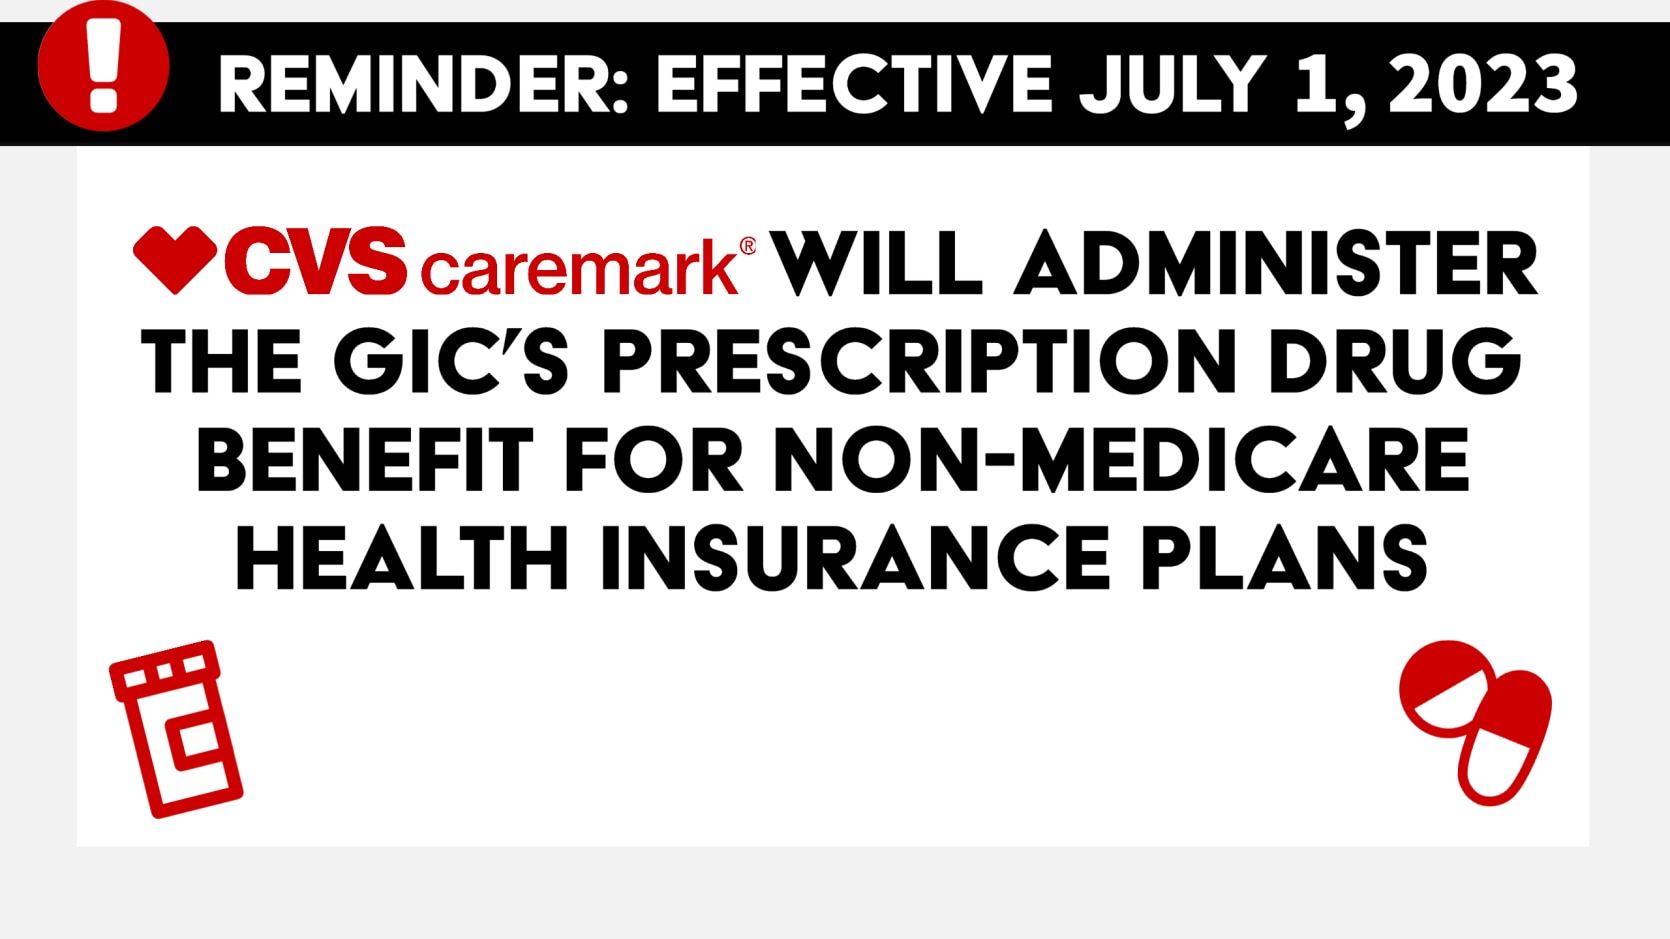 CVS Caremark will administer the GIC's prescription drug benefit for non-Medicare health insurance plans effective July 1, 2023.